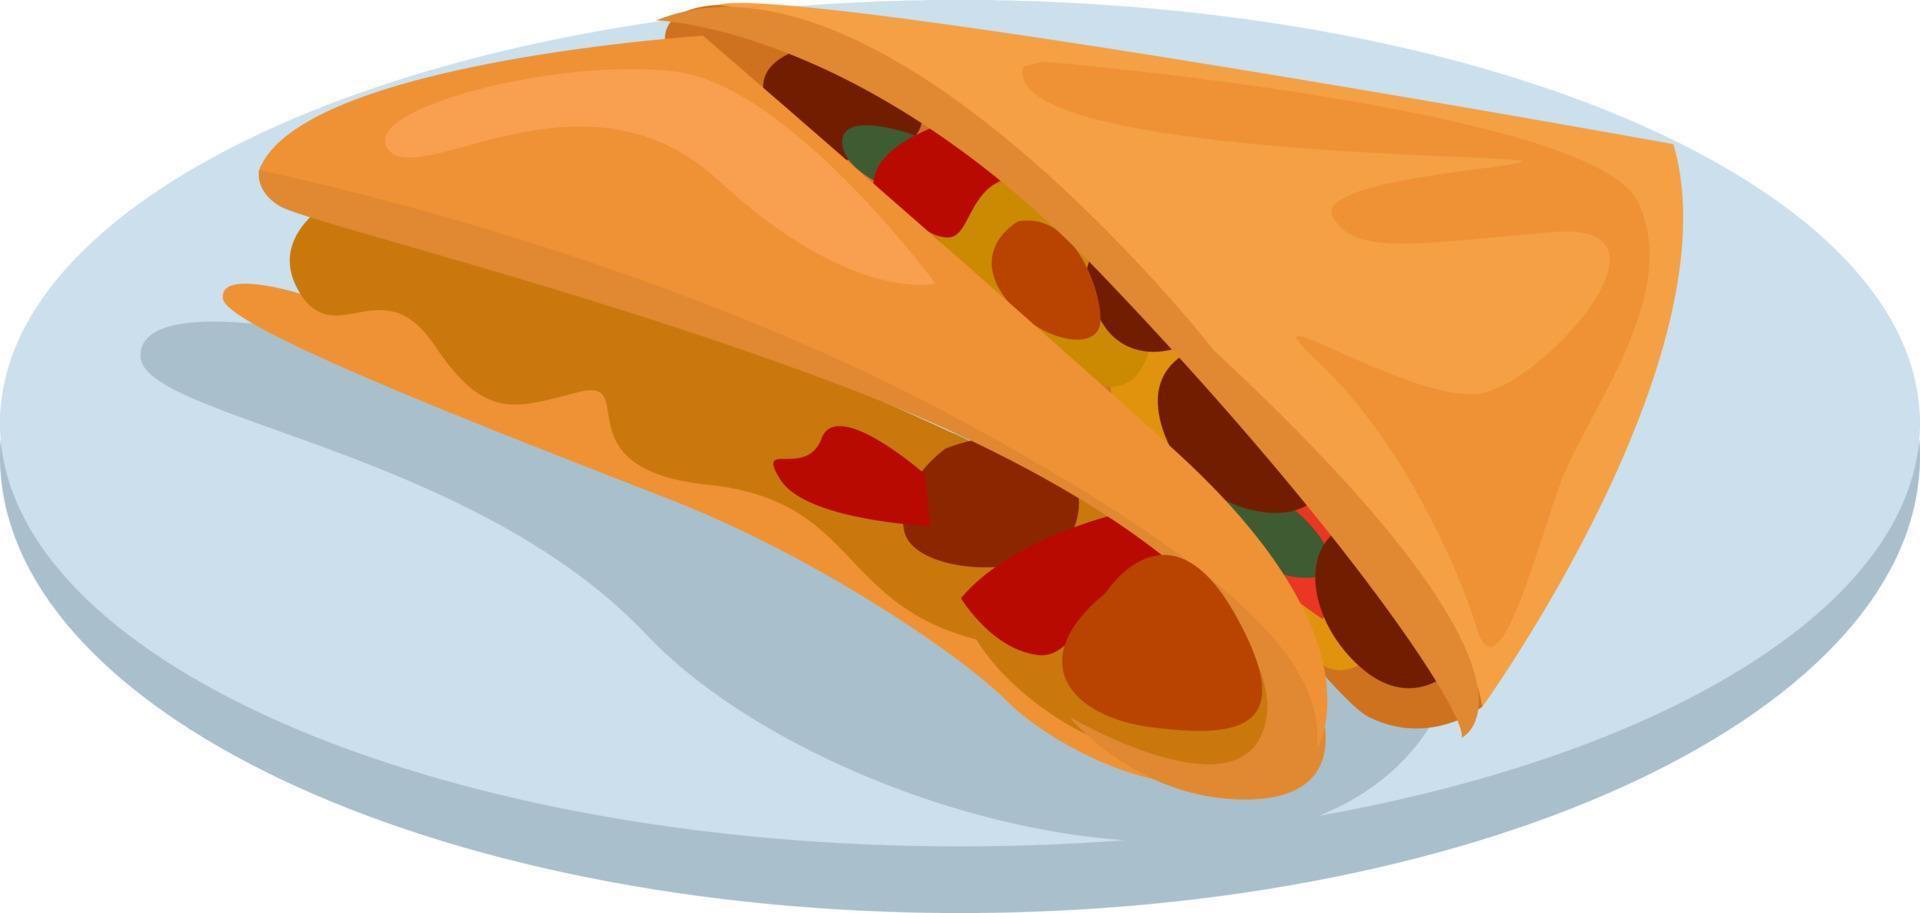 Quesadilla food, illustration, vector on white background